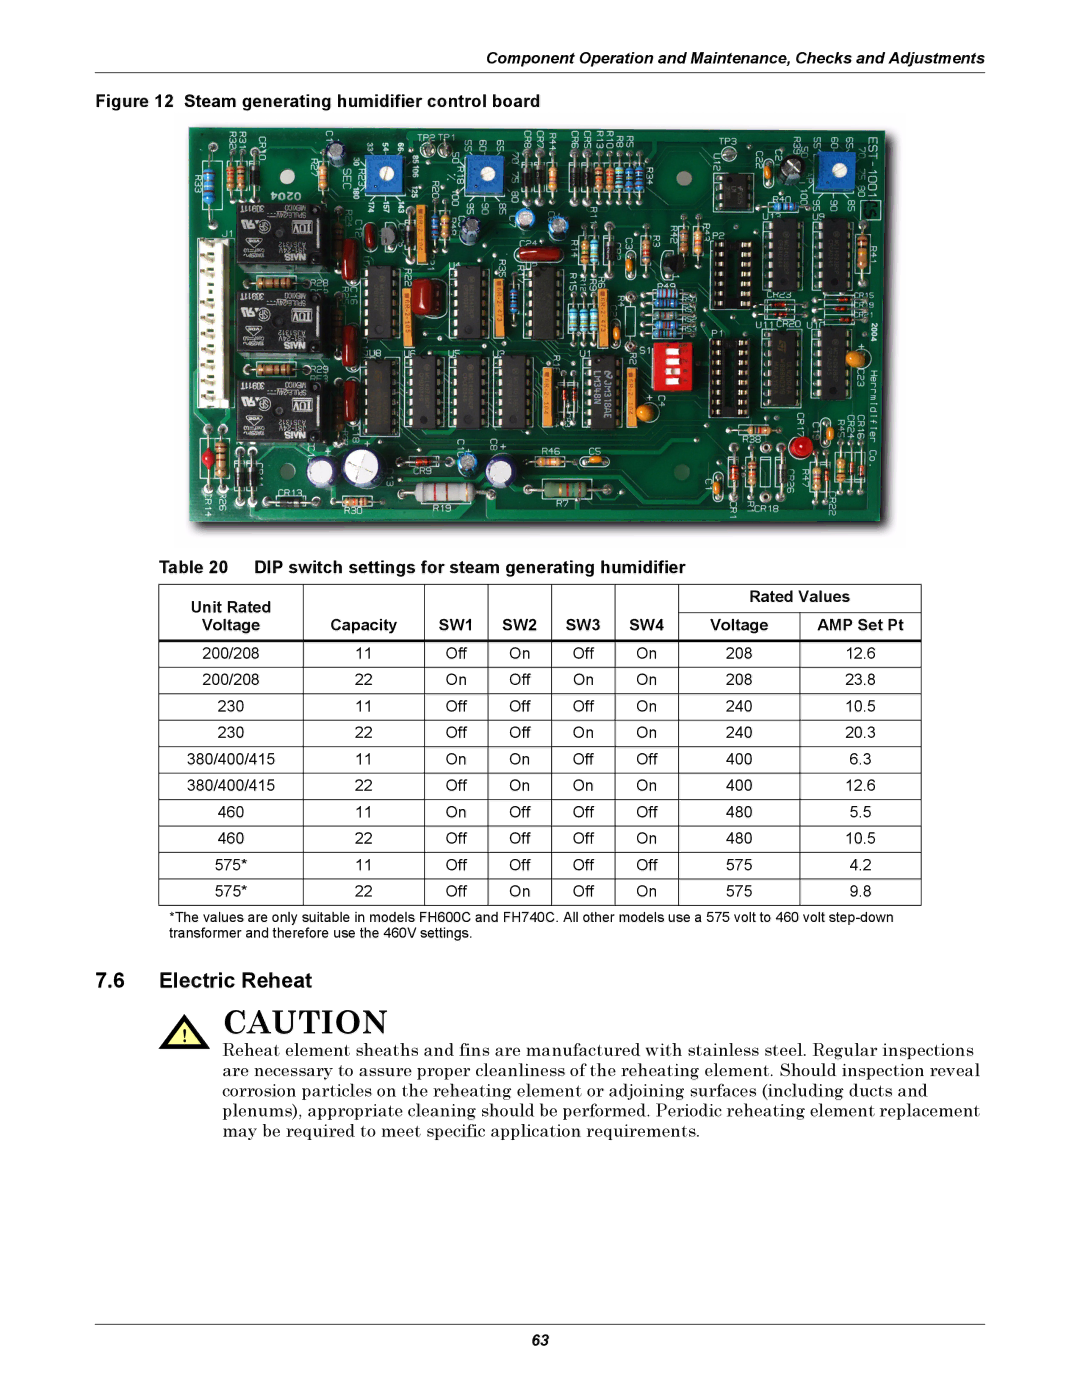 Emerson DH, VH, DE, VE manual Electric Reheat, Unit Rated Rated Values Voltage Capacity, Voltage AMP Set Pt 